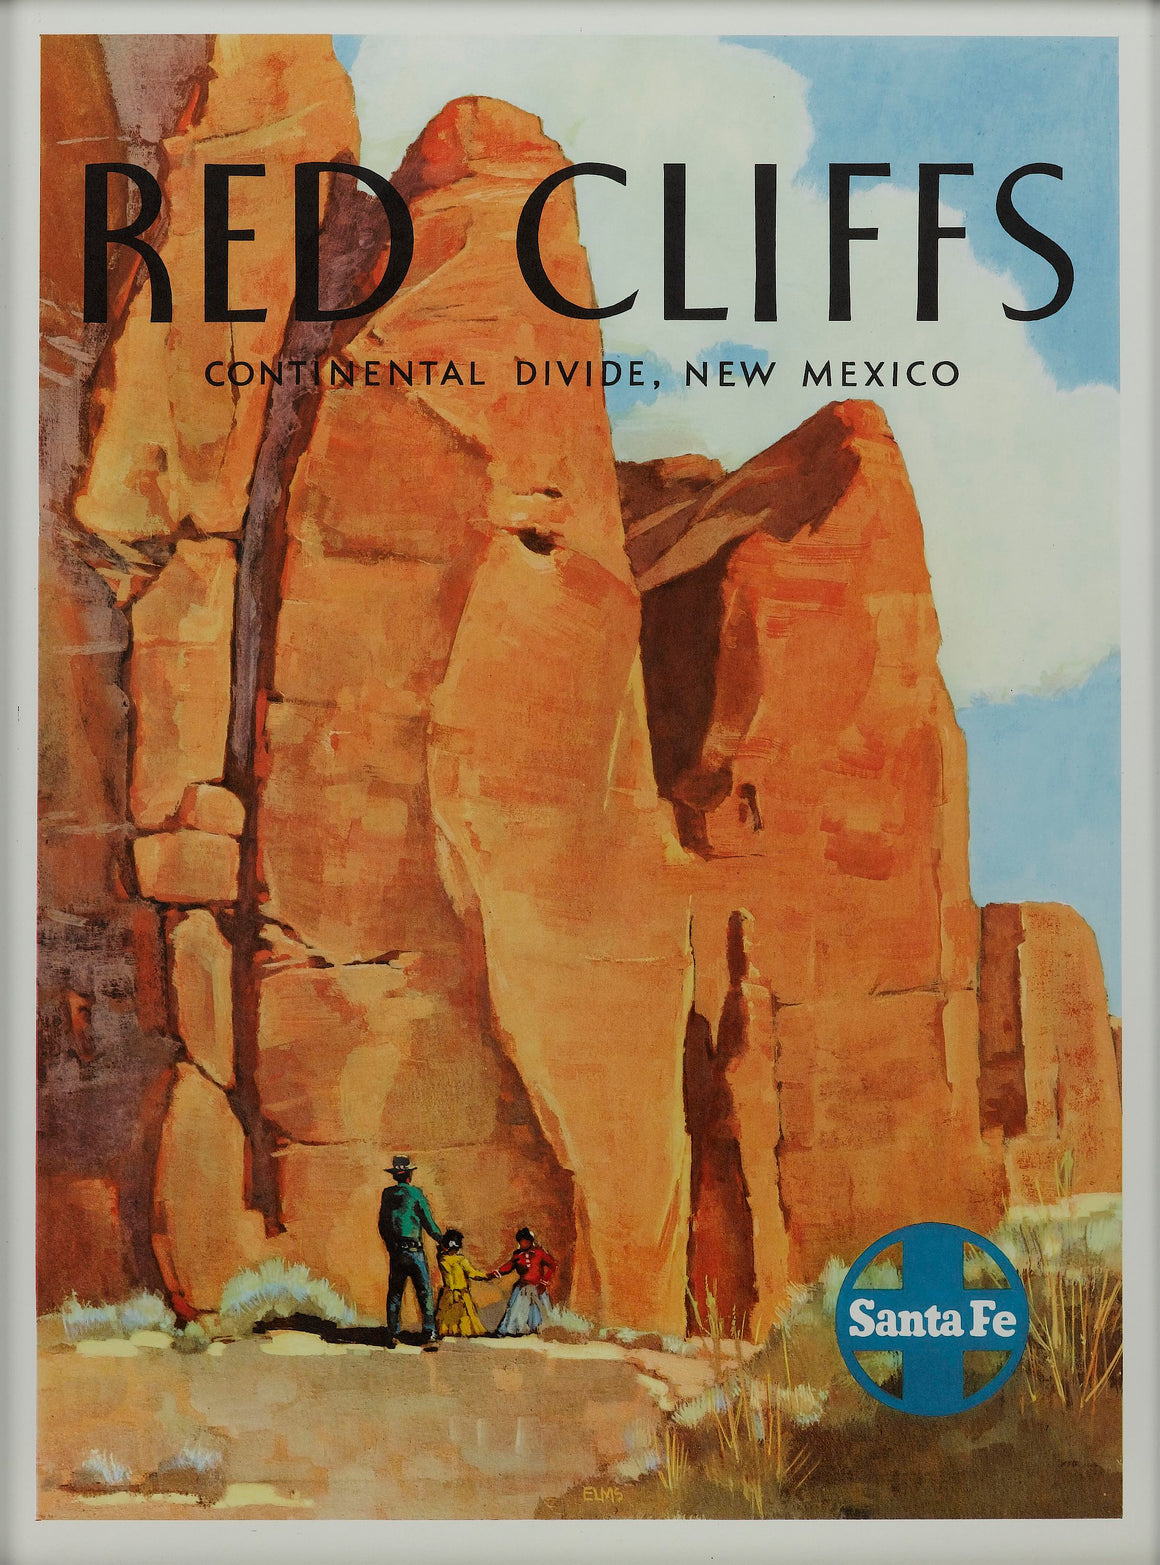 "Red Cliffs" Vintage Santa Fe Railroad Travel Poster by Frederick Elms, Circa 1950s